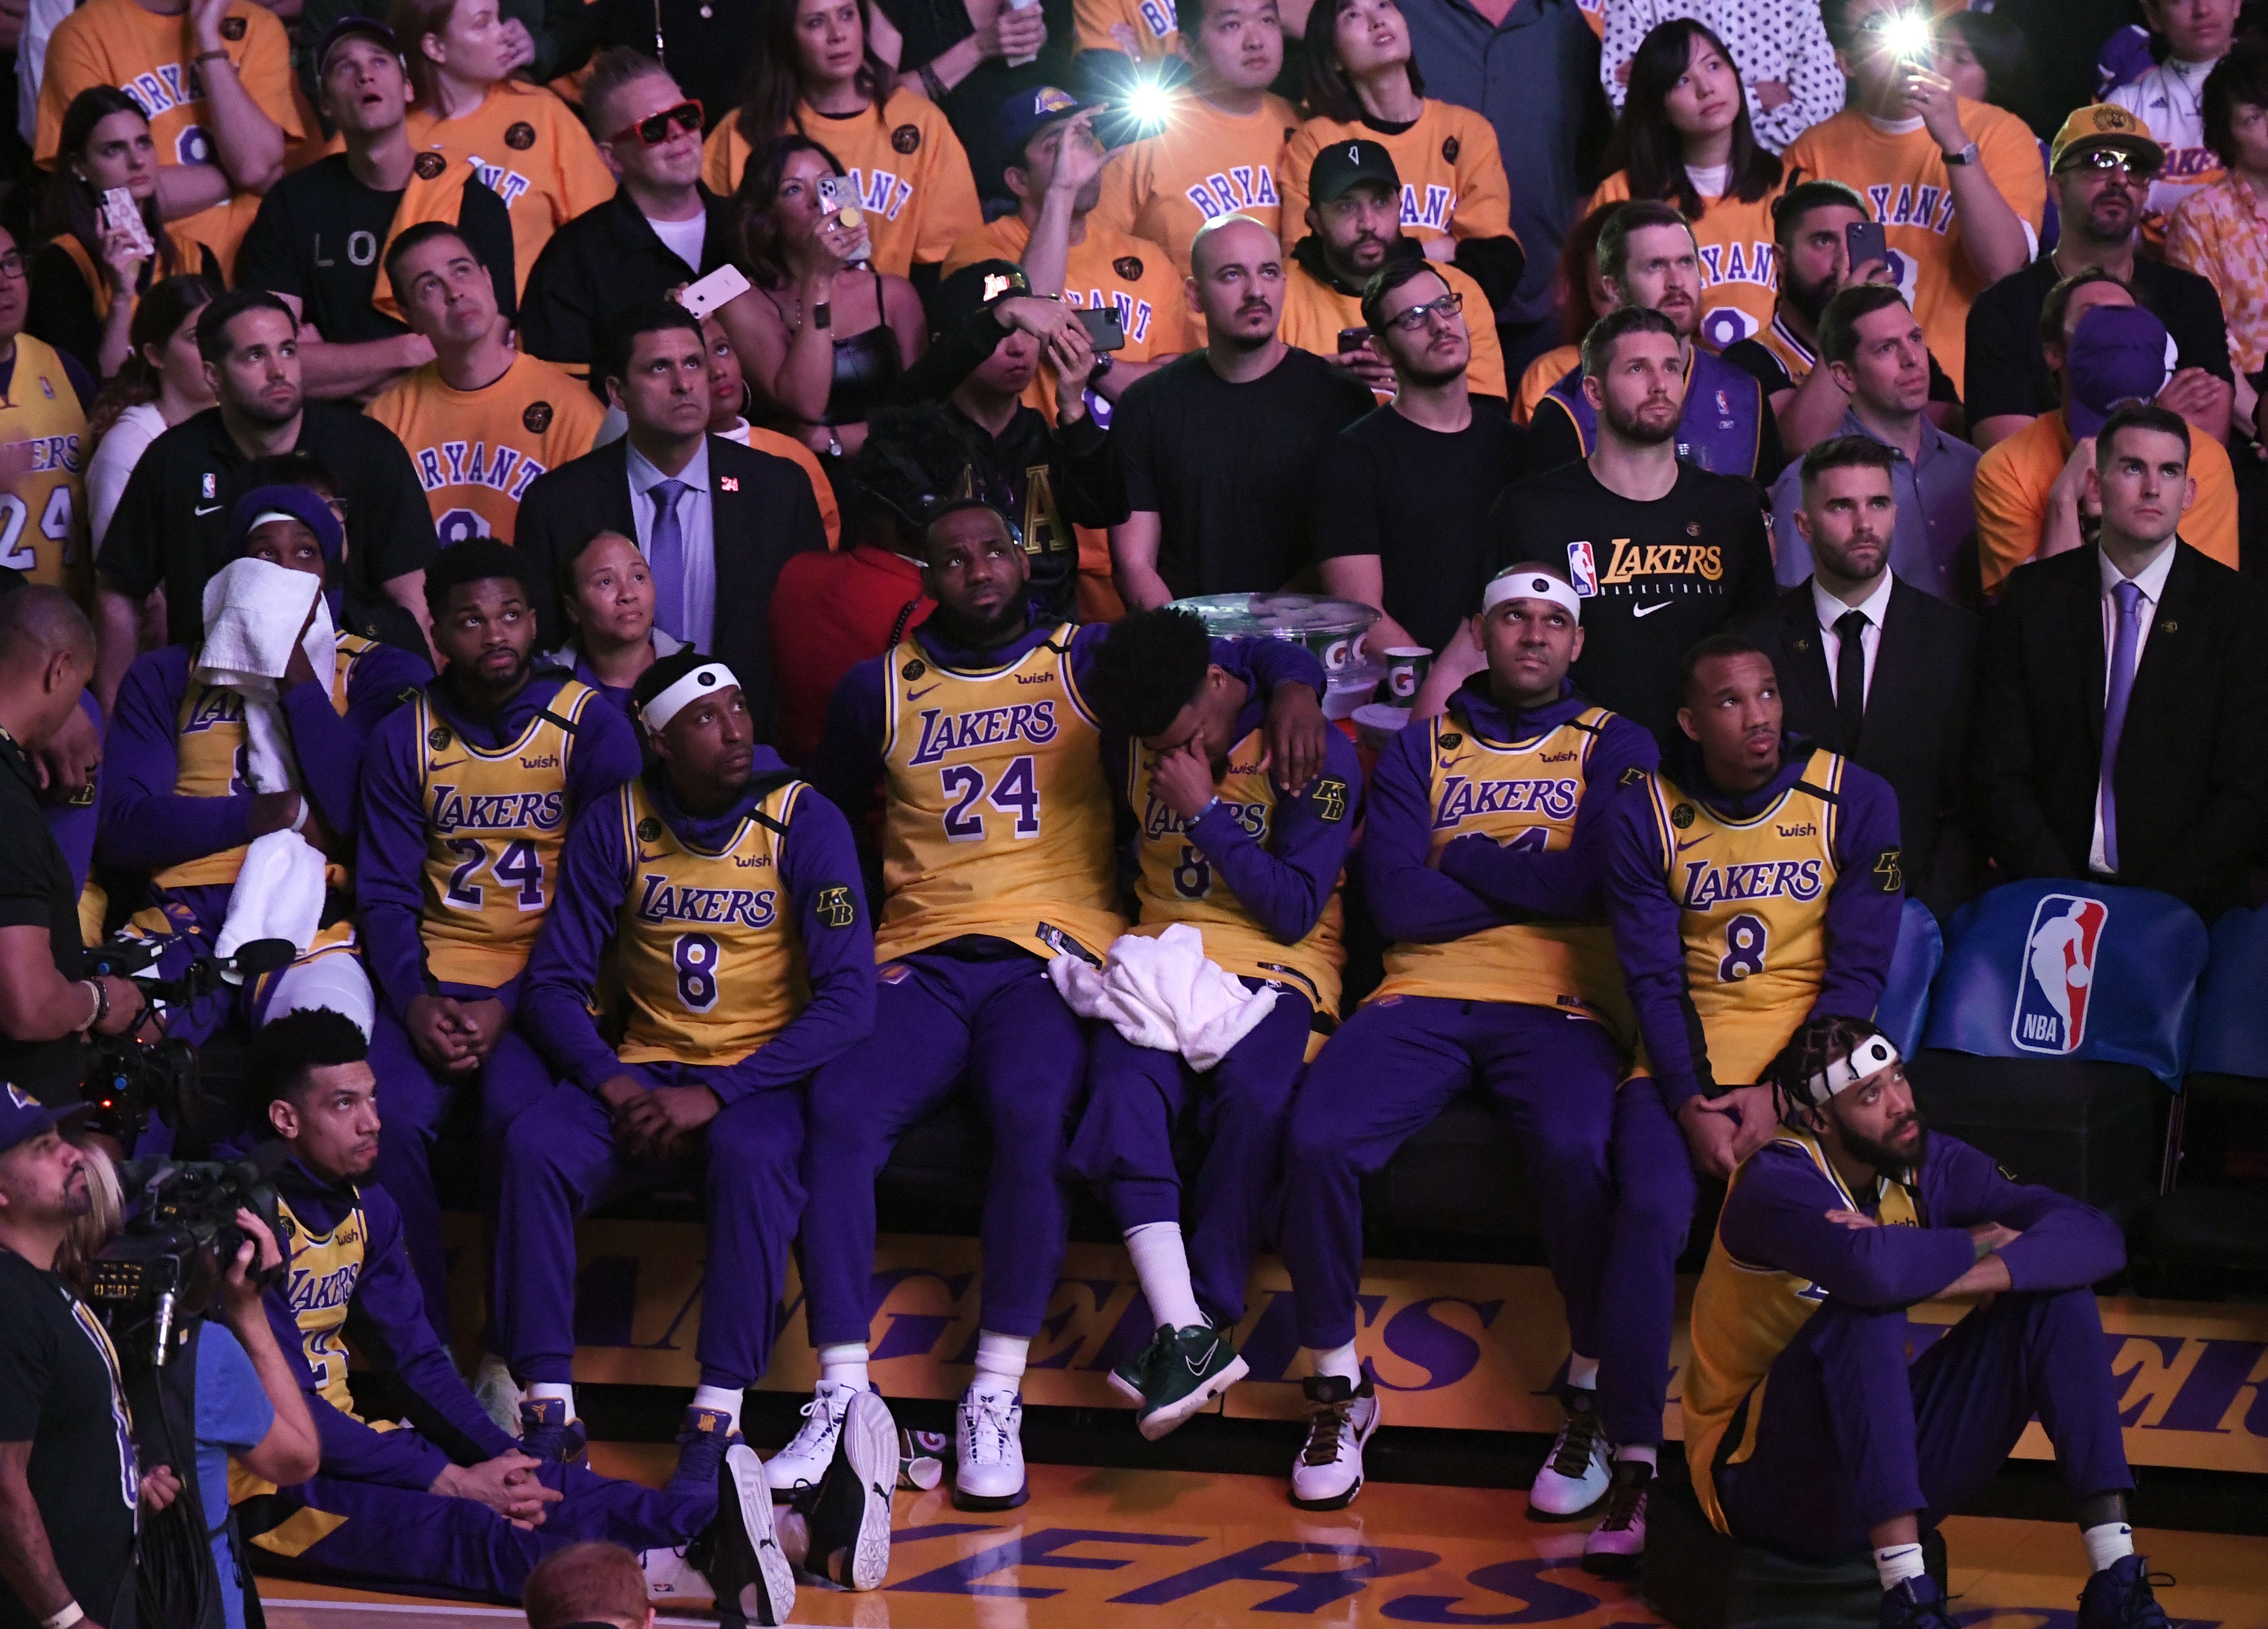 Vanessa Bryant posts photo of Lakers' Kobe Bryant tribute jerseys